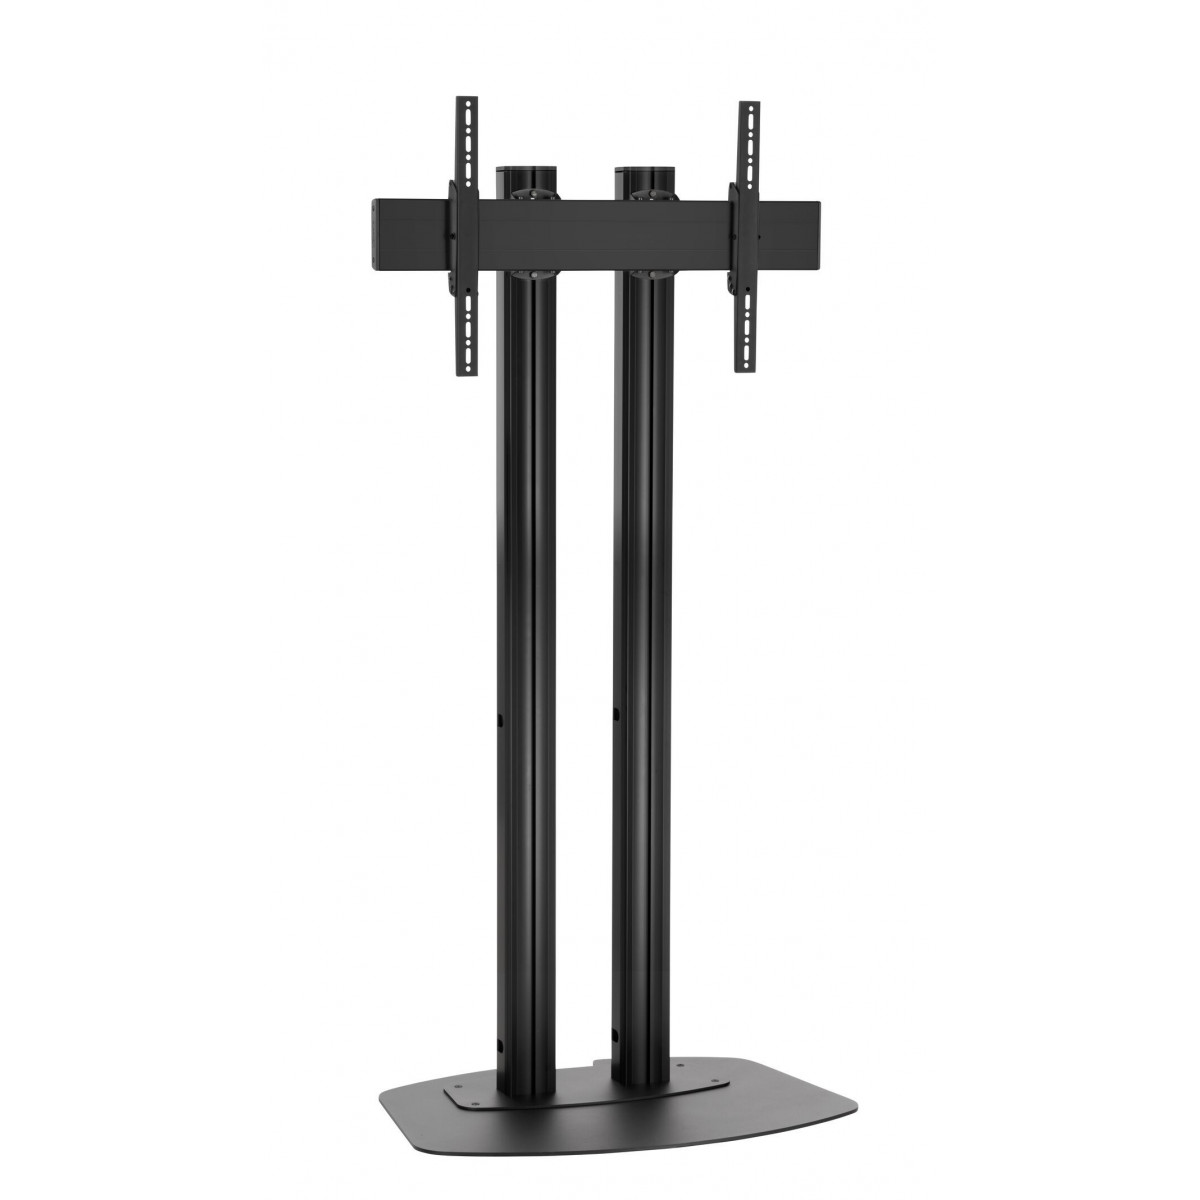 FD1584 Floor stand, double pole 150cm, 800x400 black